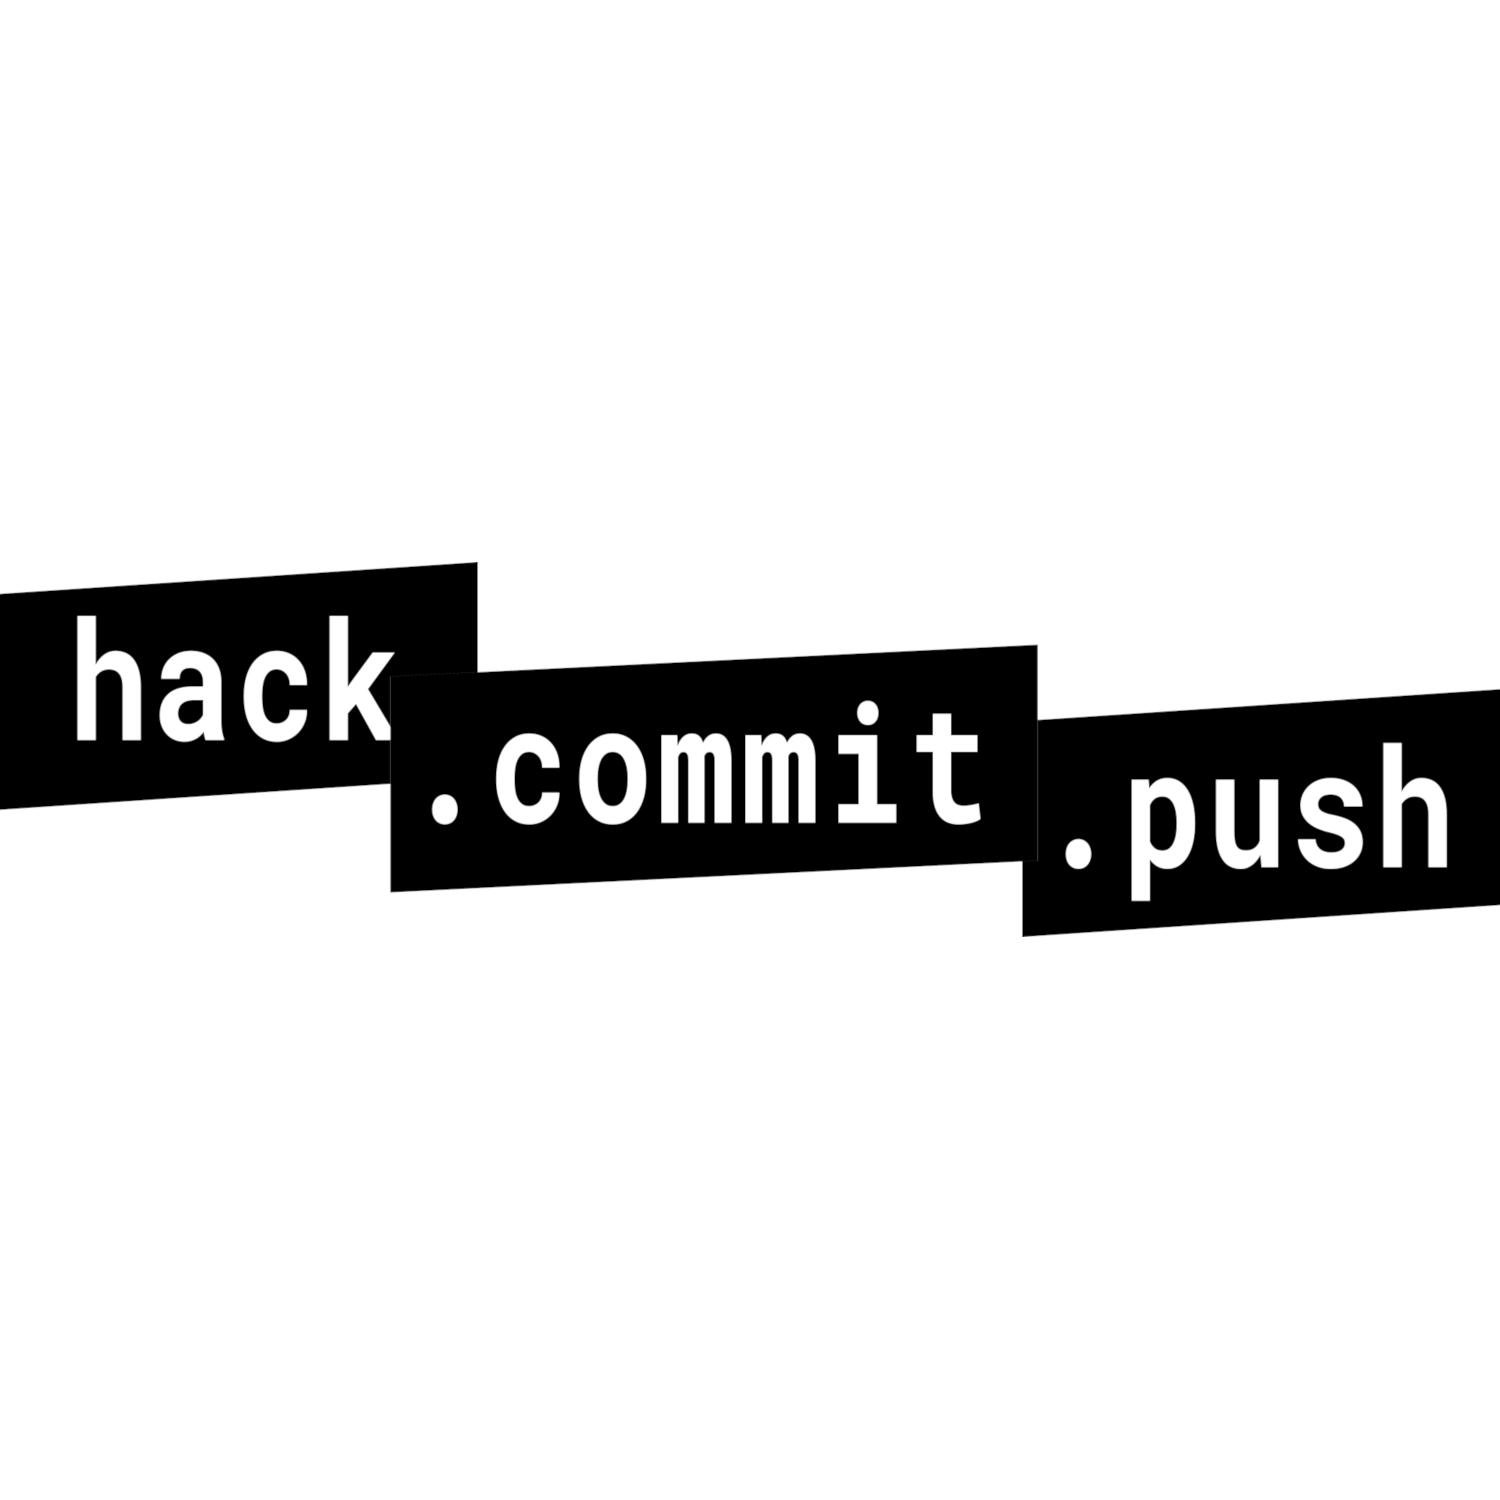 hack.commit.push